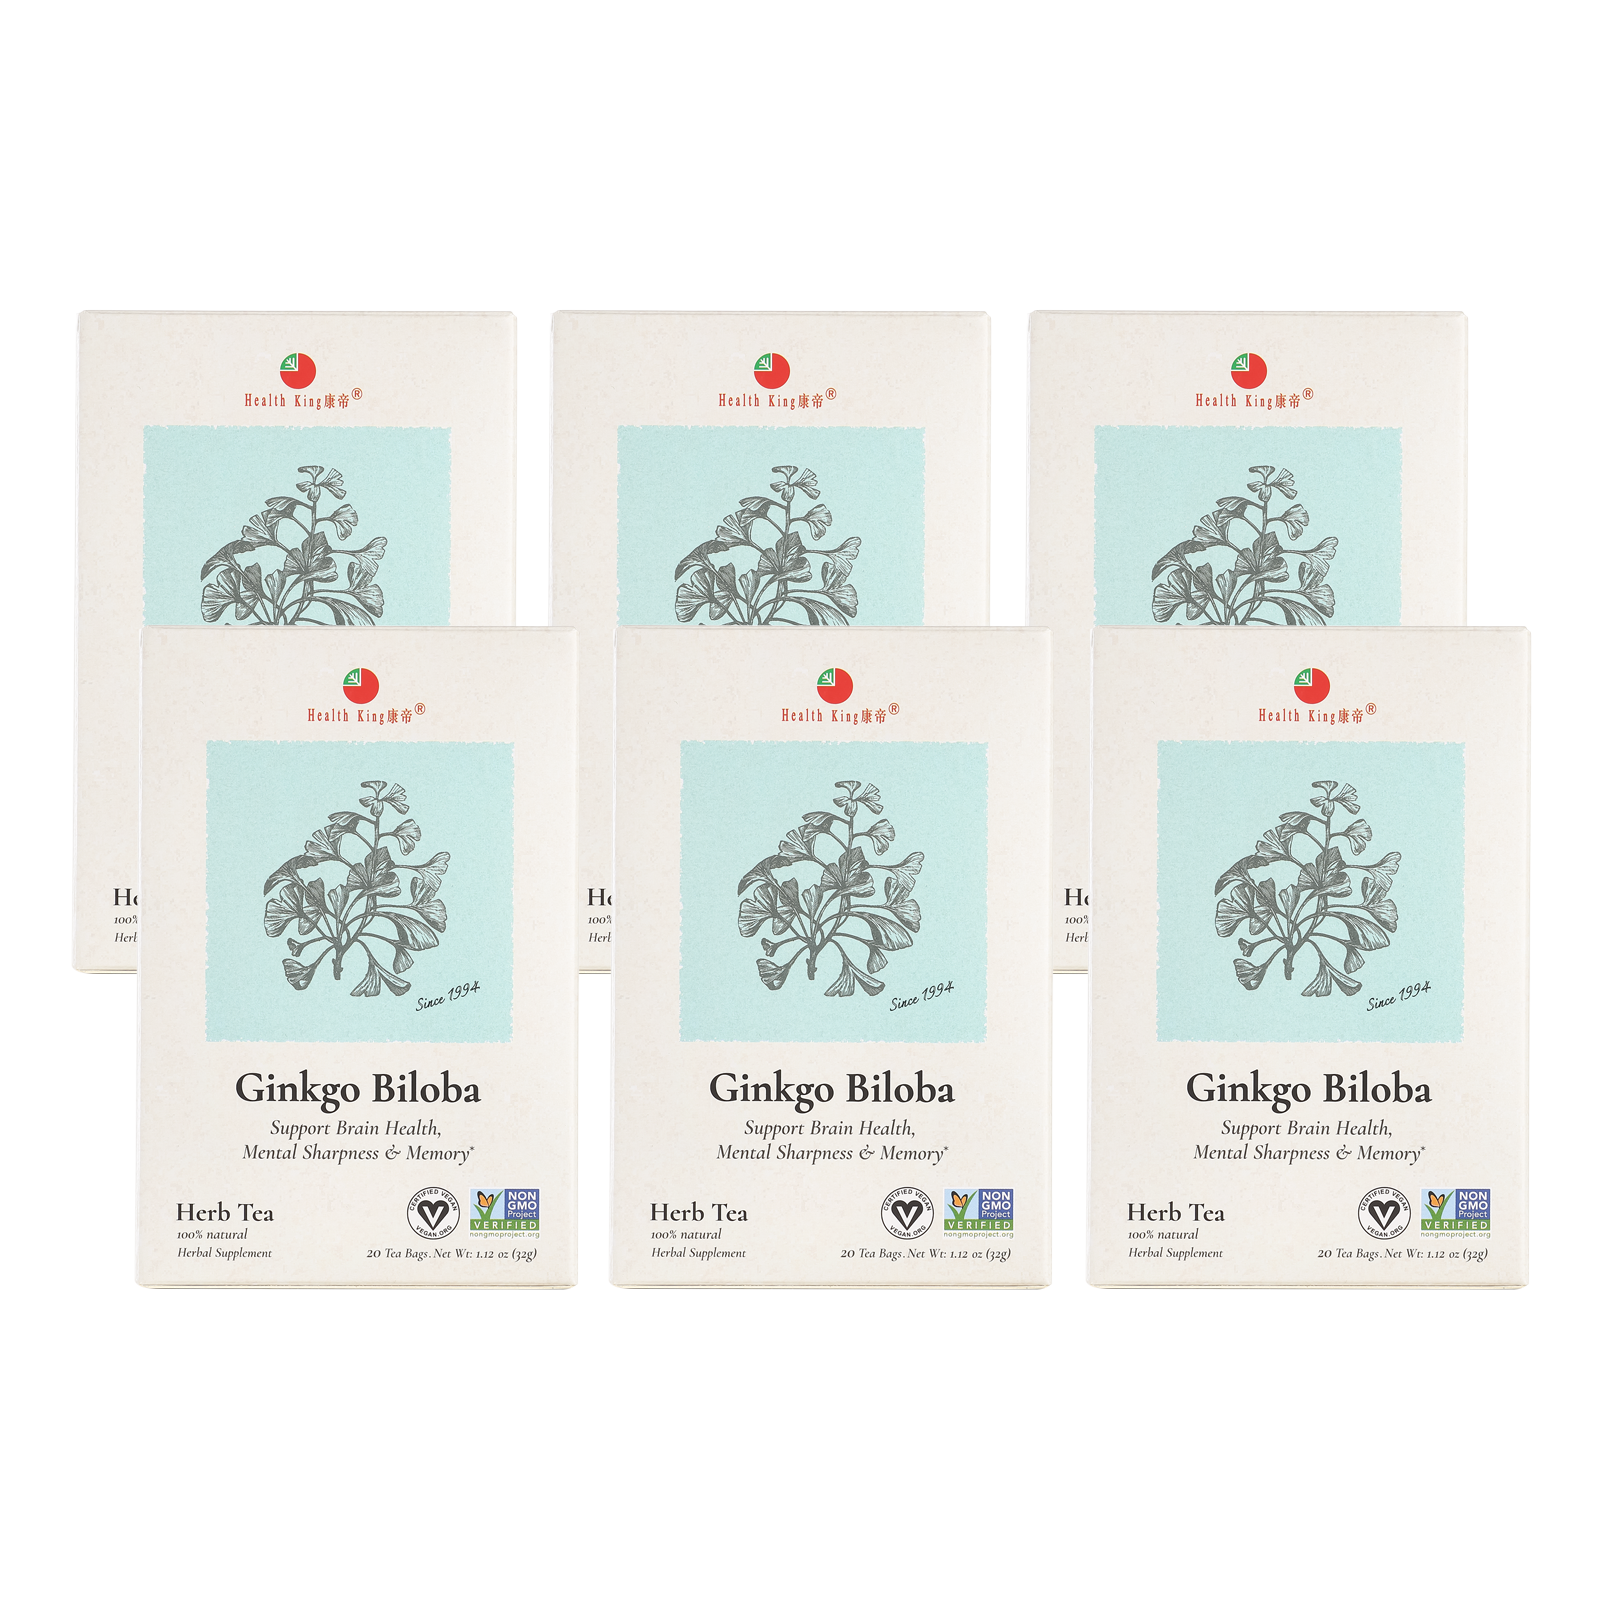 Six caffeine-free Ginkgo Biloba tea bags highlighting health benefits